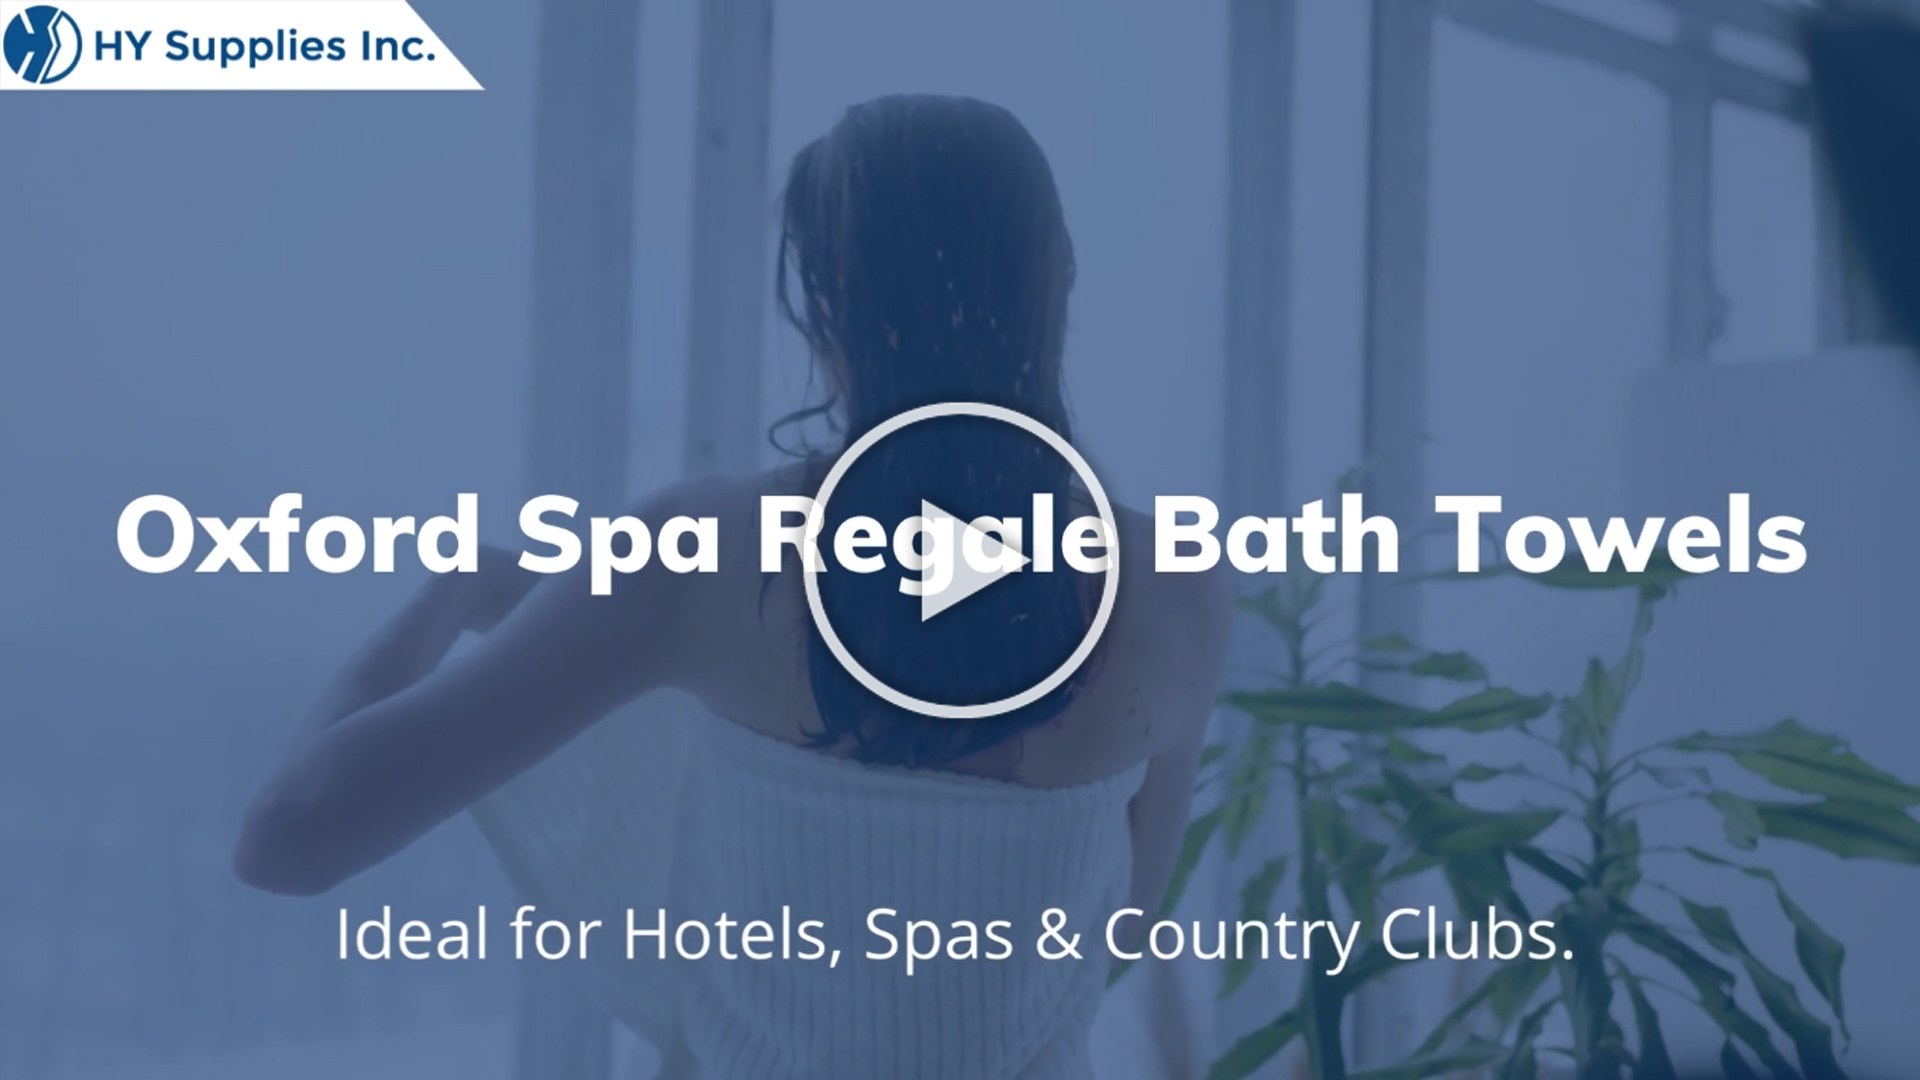 Oxford Spa regale bath towel